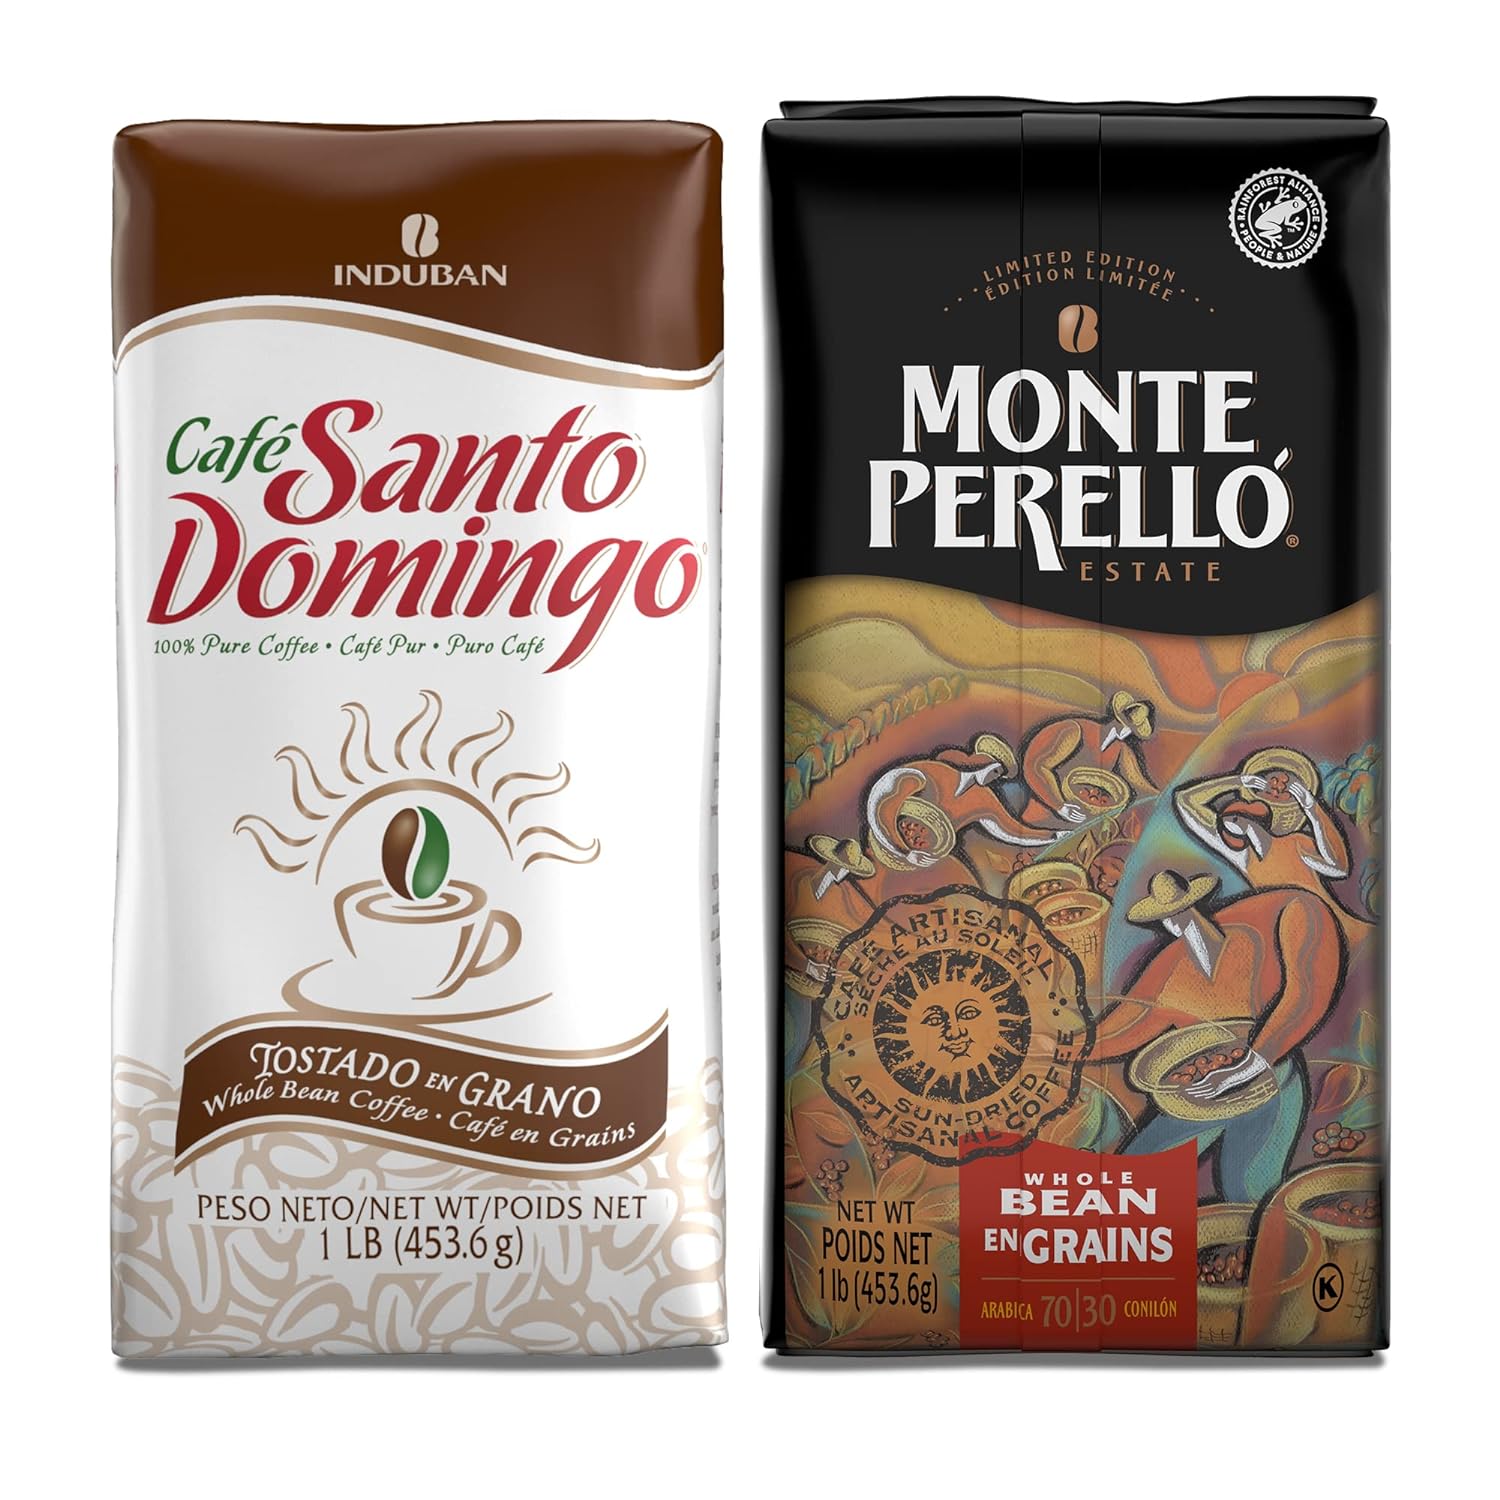 Café Santo Domingo + Monte Perello | Whole-Bean Coffee - 16 oz Bags Bundle - Products from the Dominican Republic